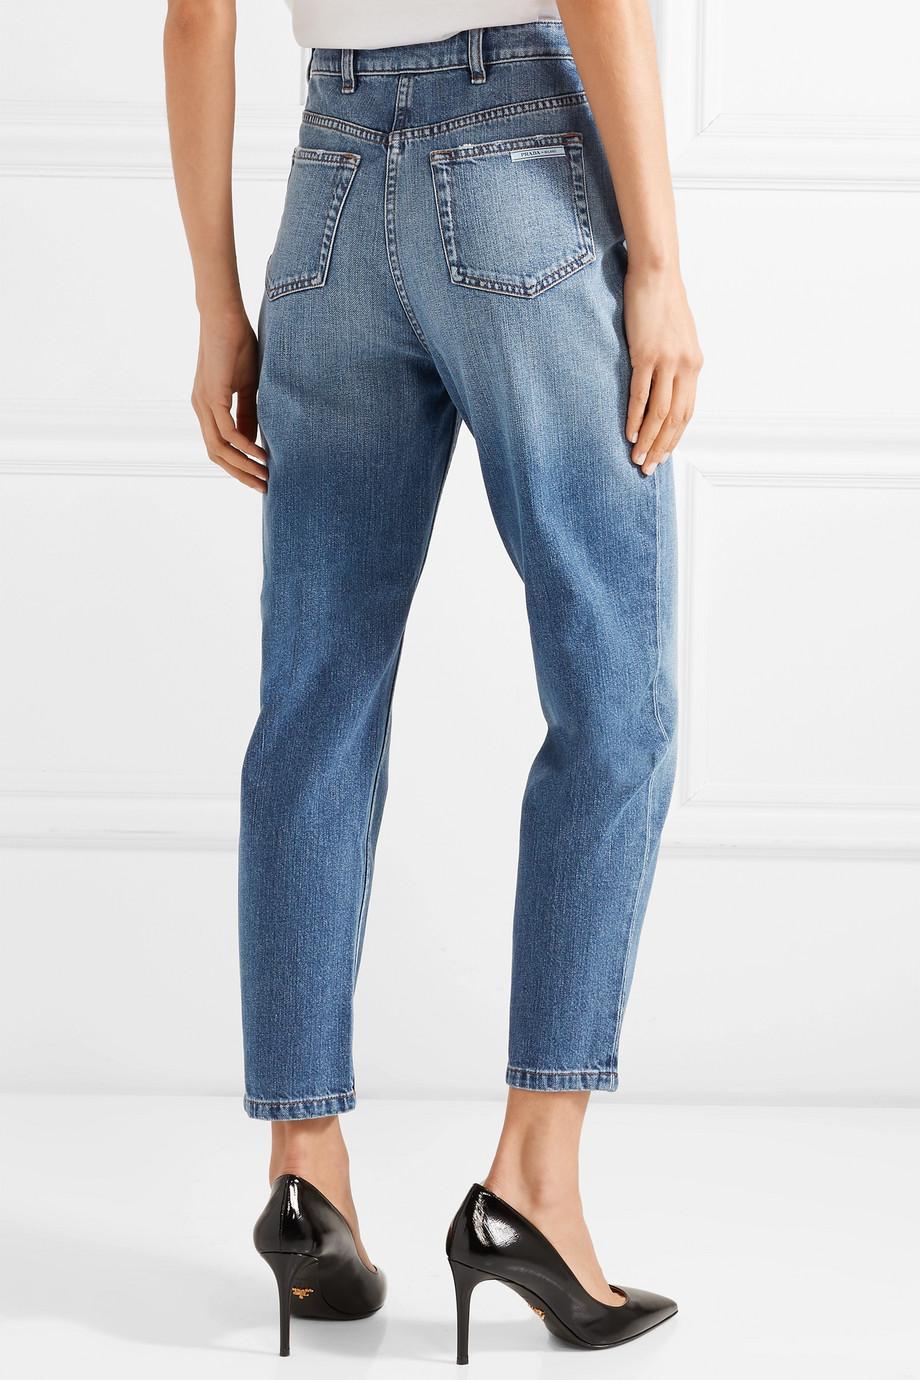 Prada Cropped High-rise Jeans in Blue - Lyst